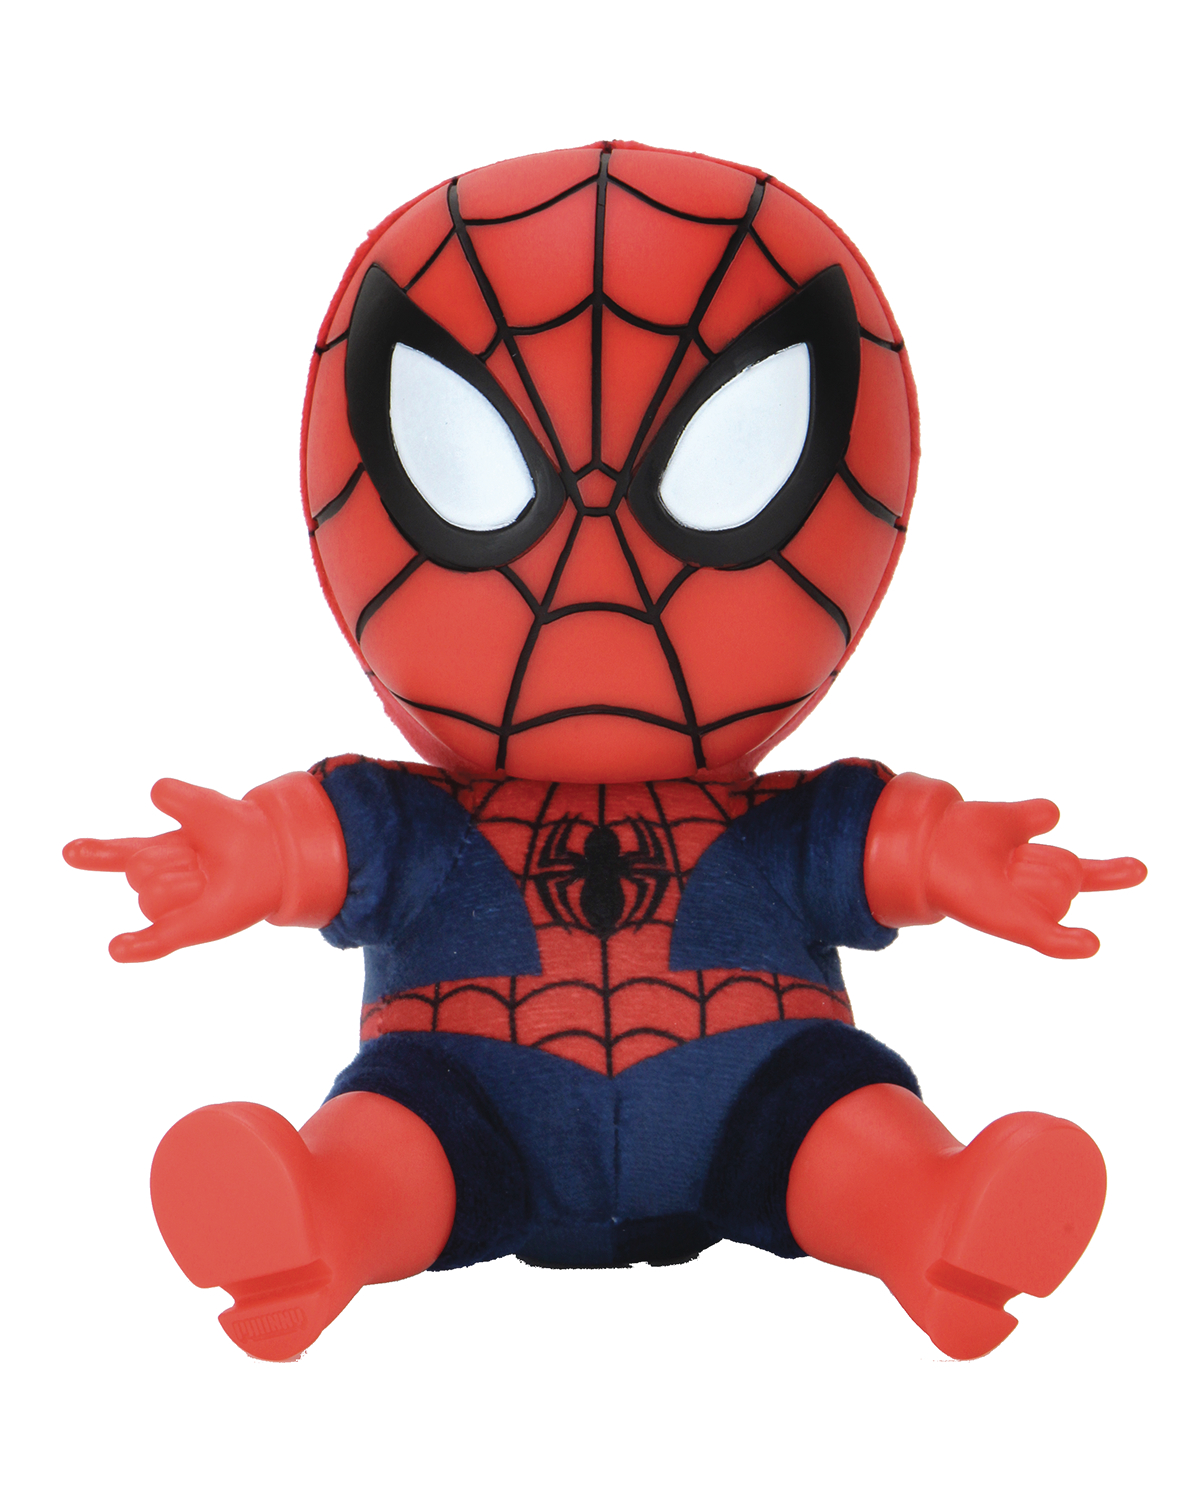 Marvel Roto Phunny Classic Spider-Man 8 Inch Plush